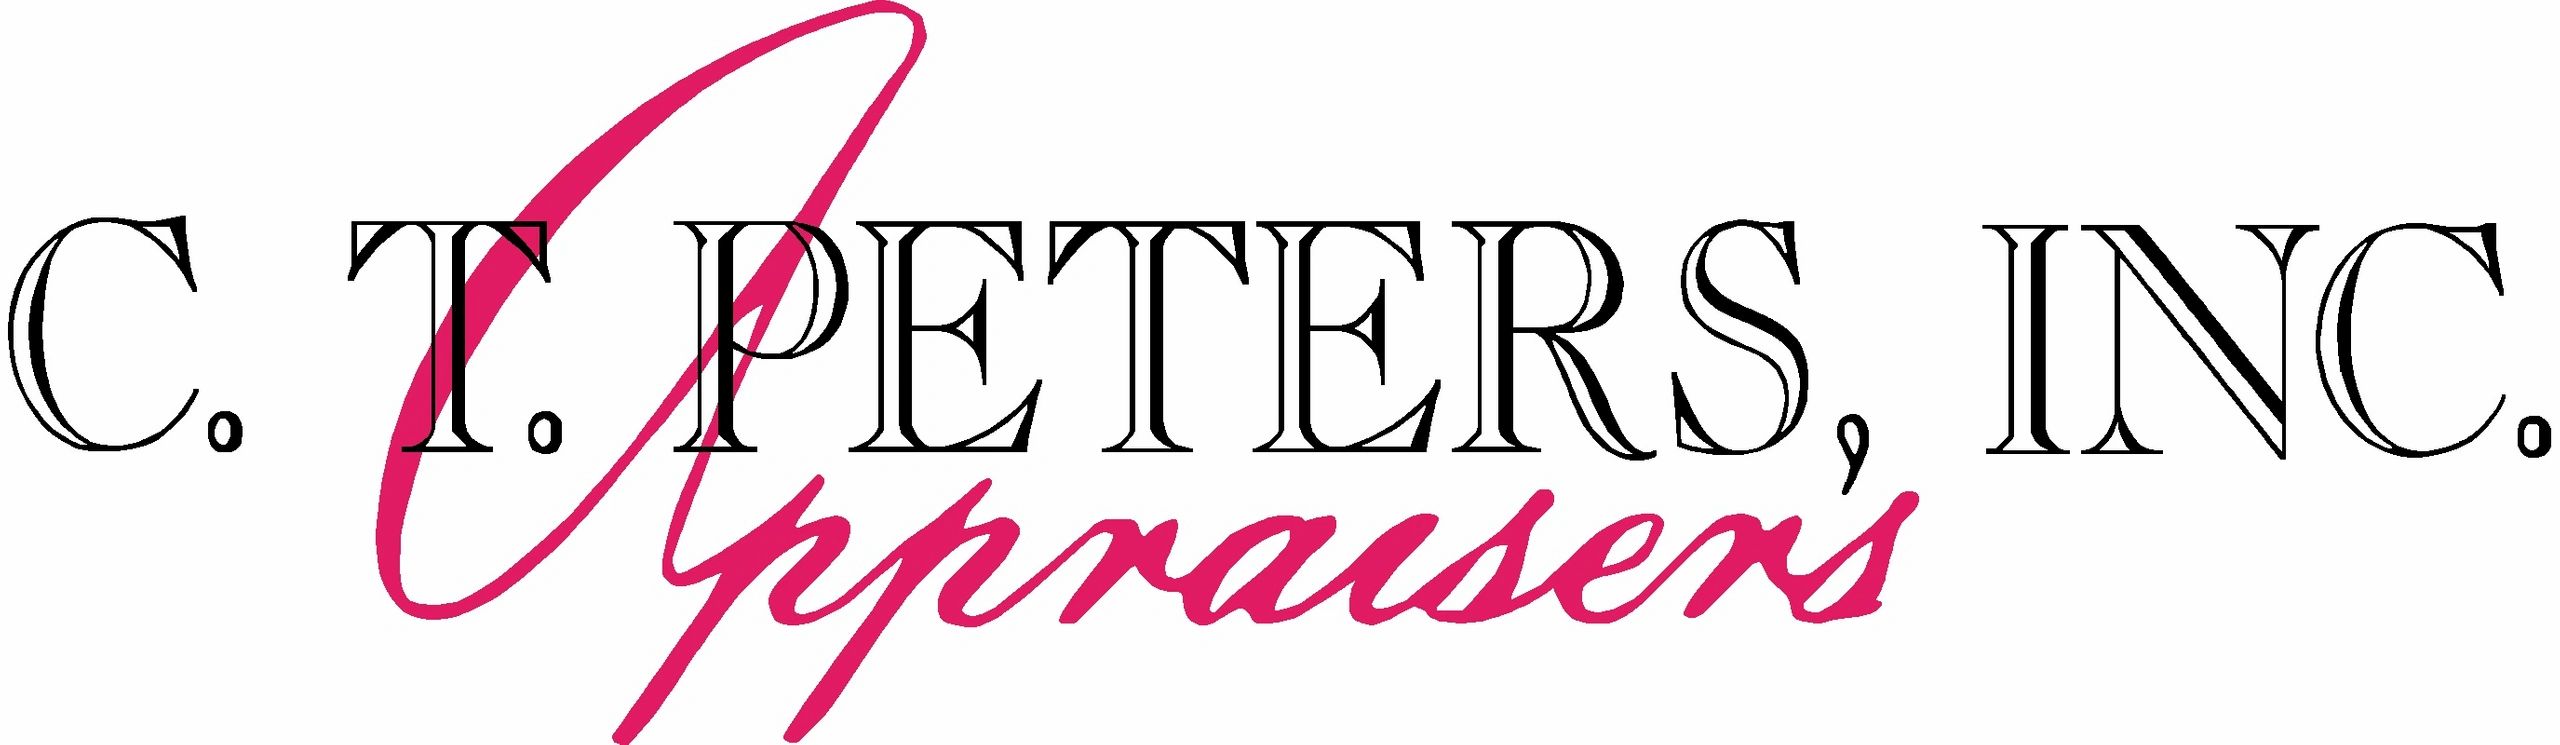 C T Peters Inc Appraisers